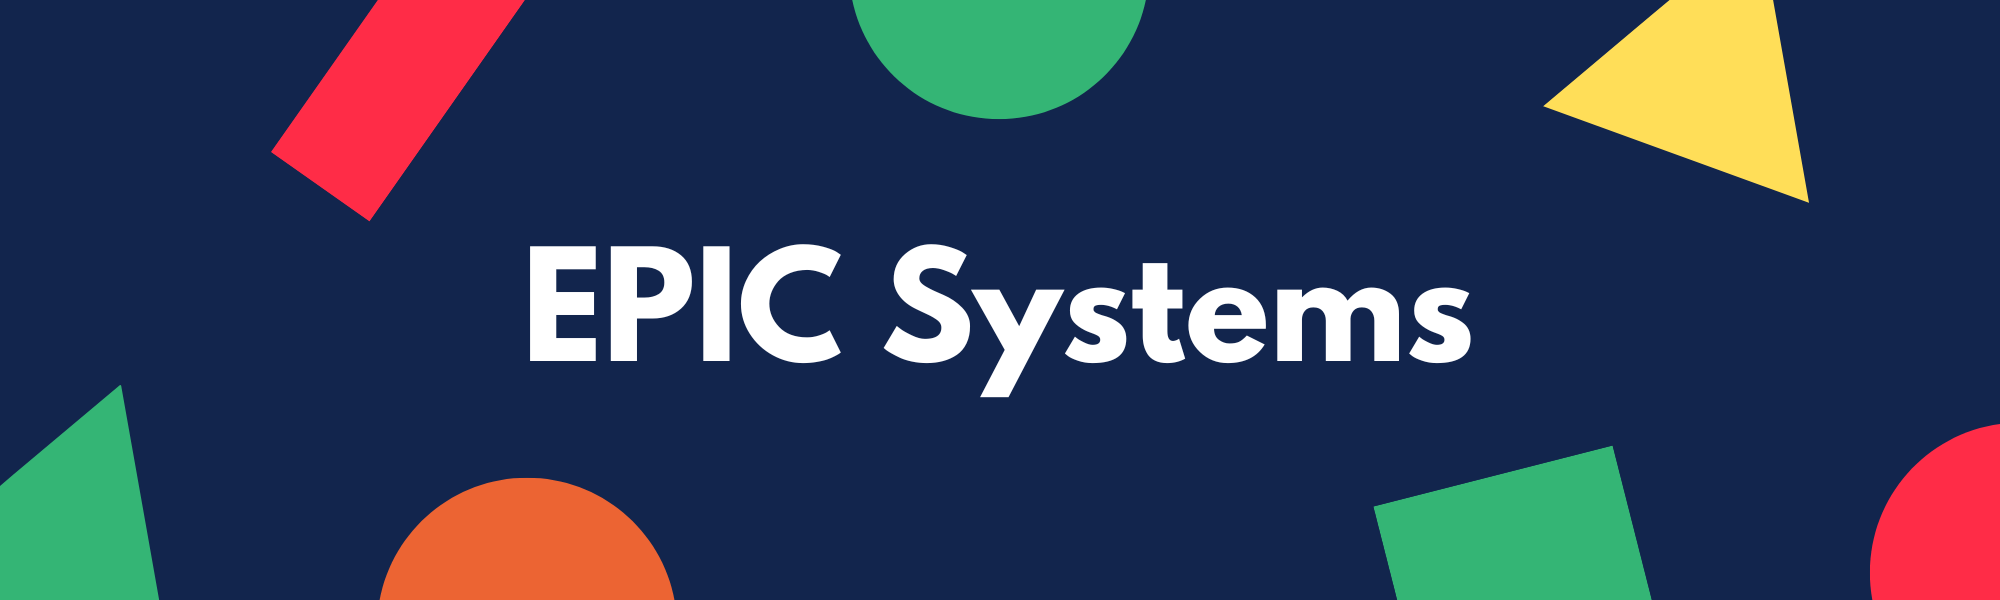 EPIC System image